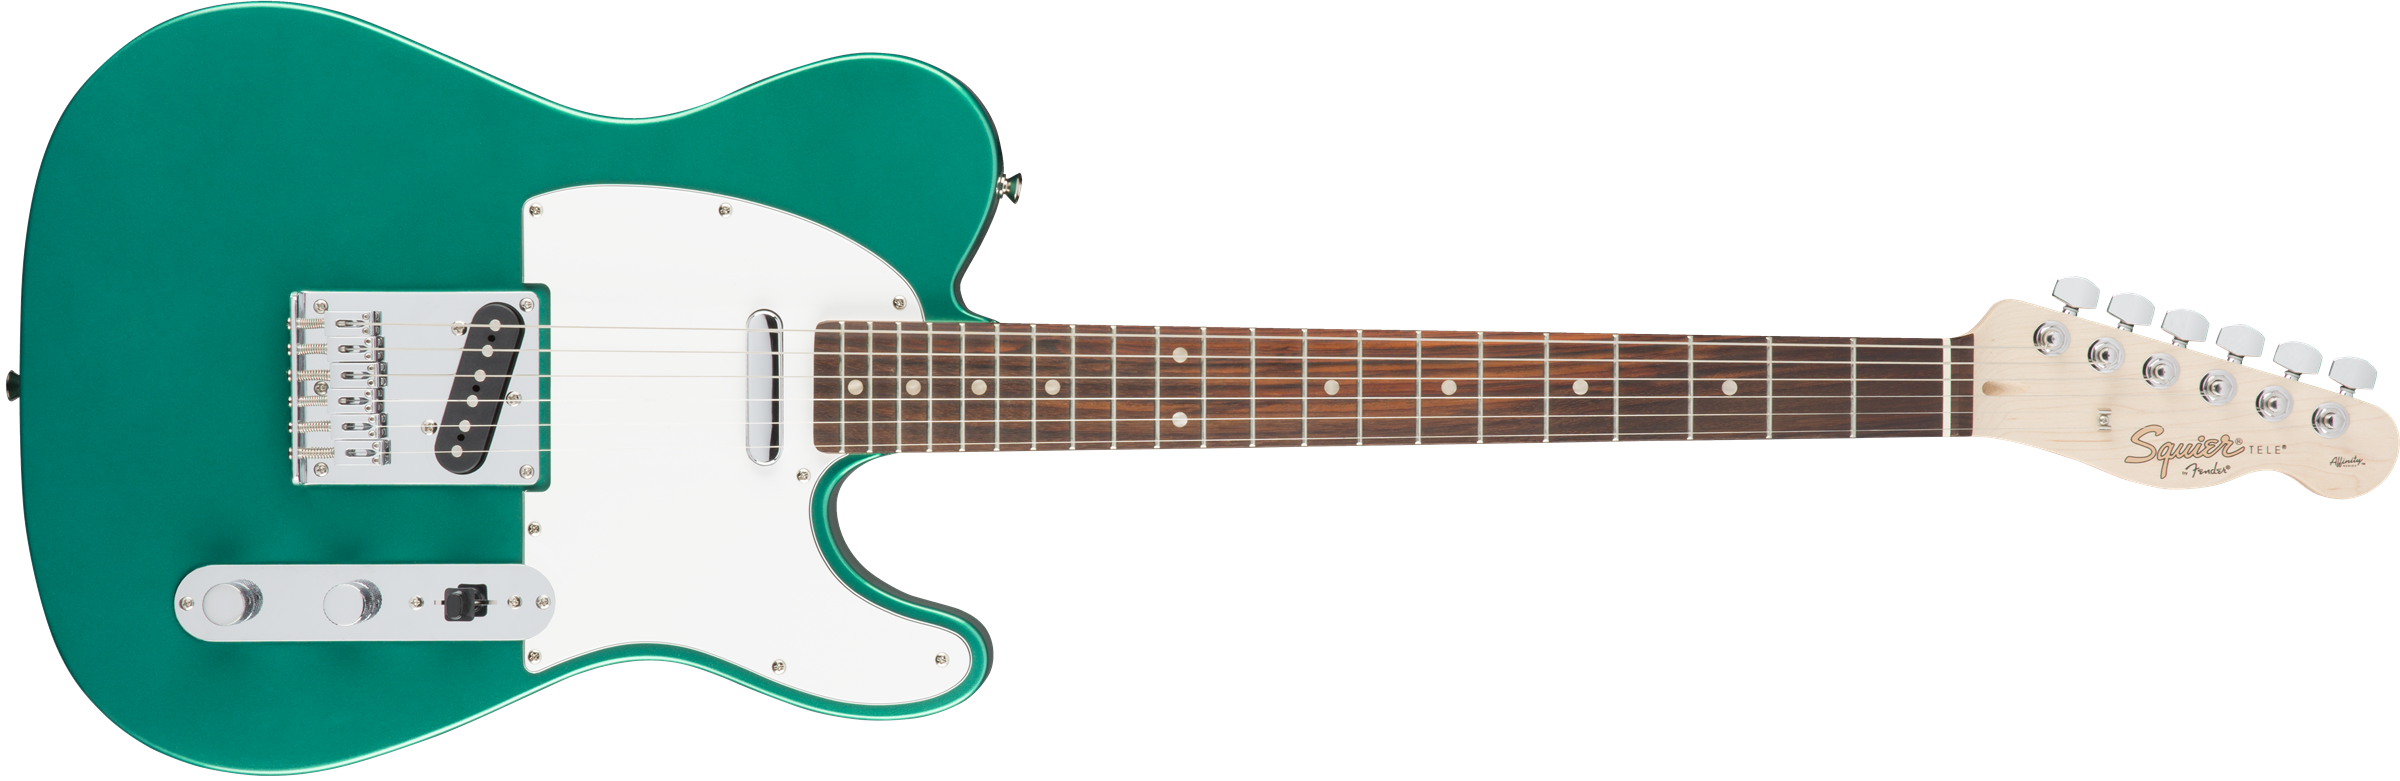 Squier Tele Affinity Series 2019 Lau - Race Green - Guitarra eléctrica con forma de tel - Variation 1